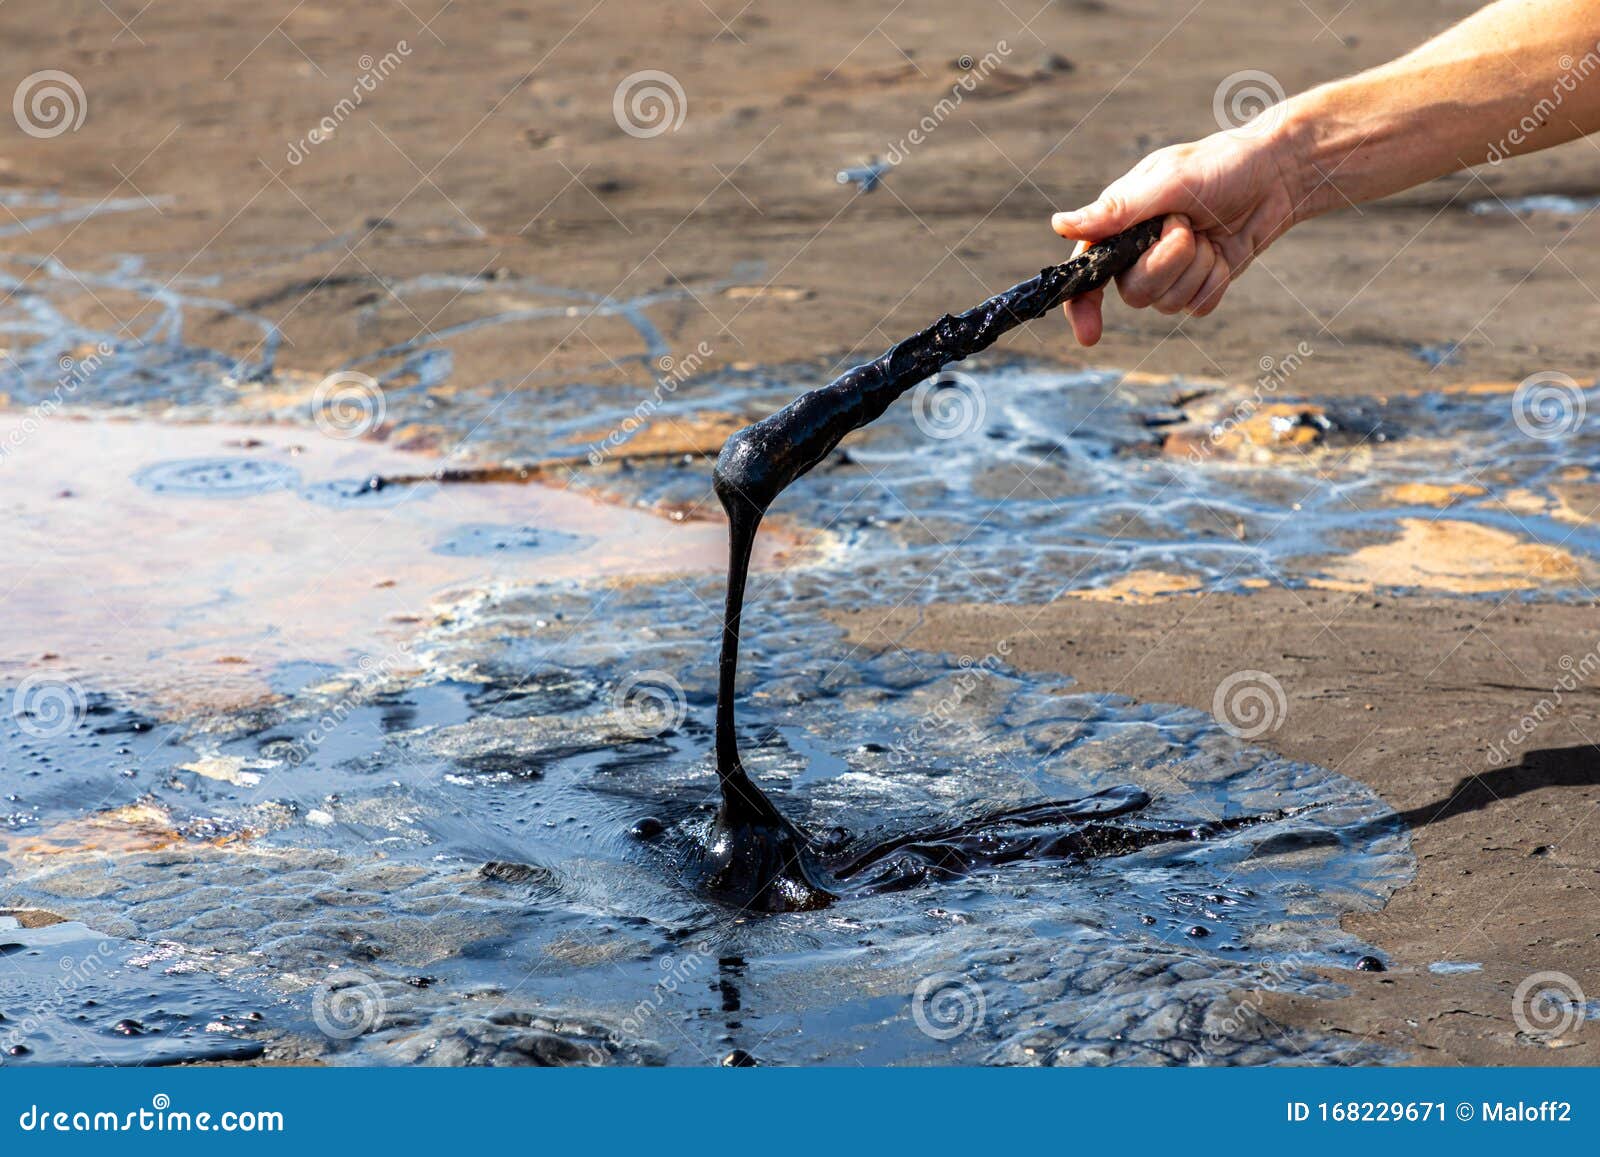 a man`s hand stirring liquid asphalt with a wooden stick at pitch lake, la brea, trinidad island, trinidad and tobago